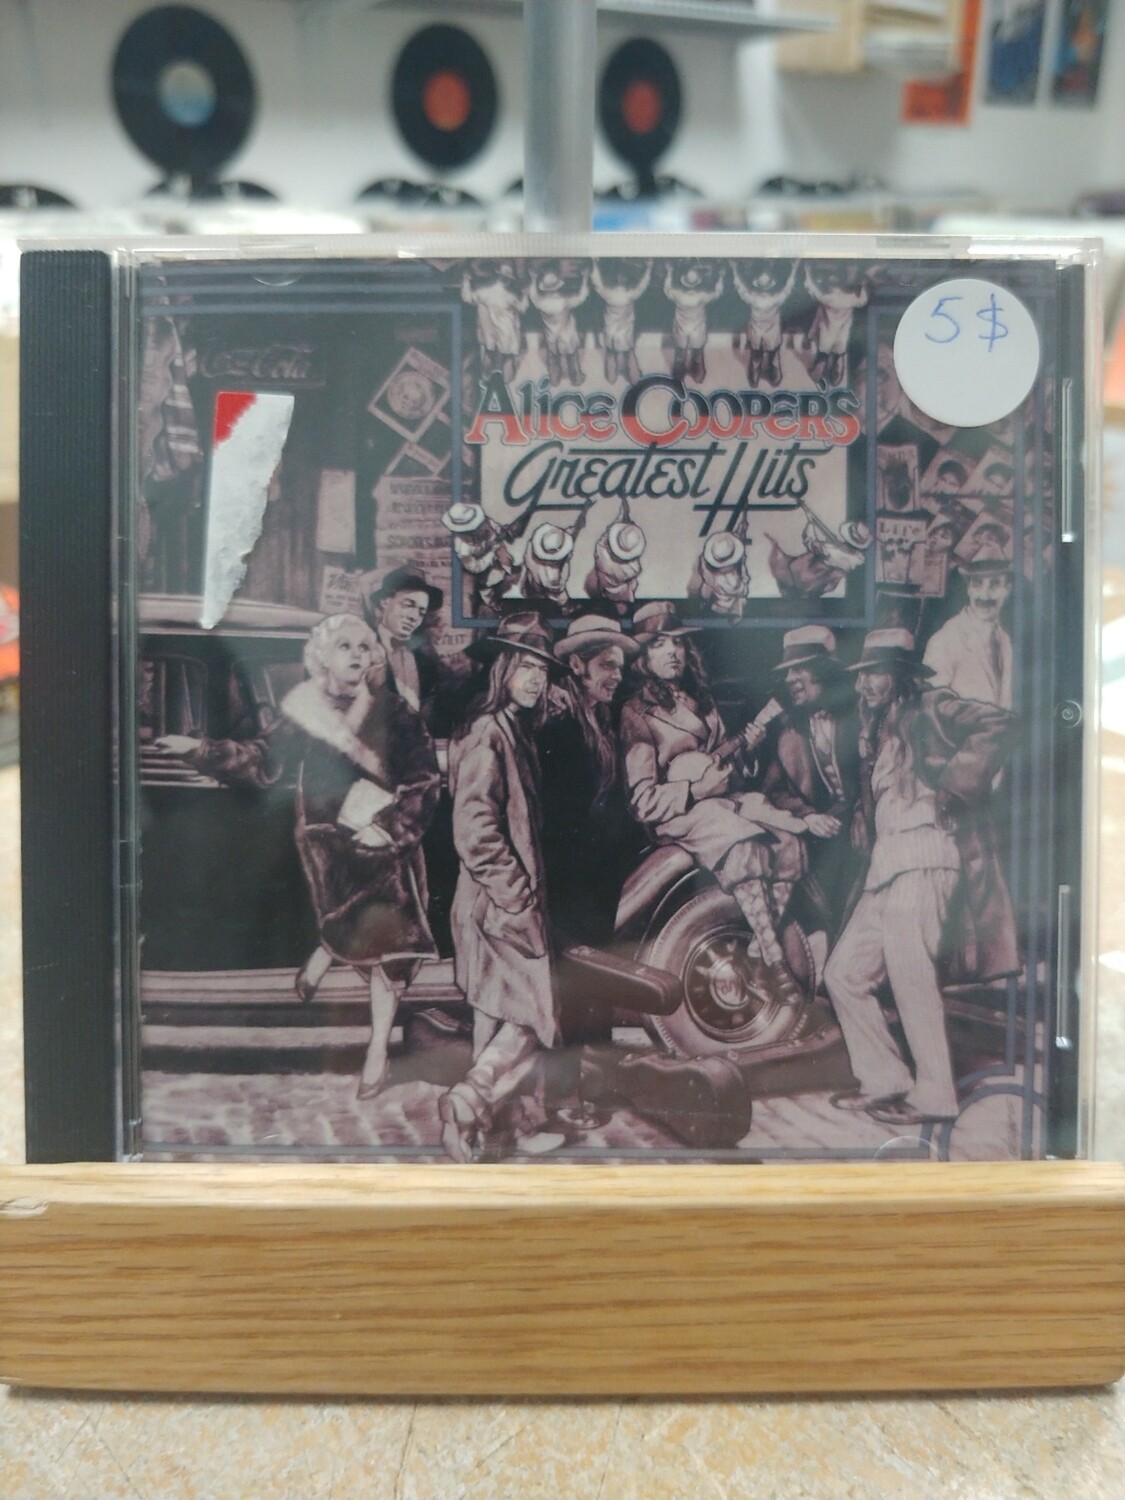 Alice Cooper - Greatest Hits (CD)